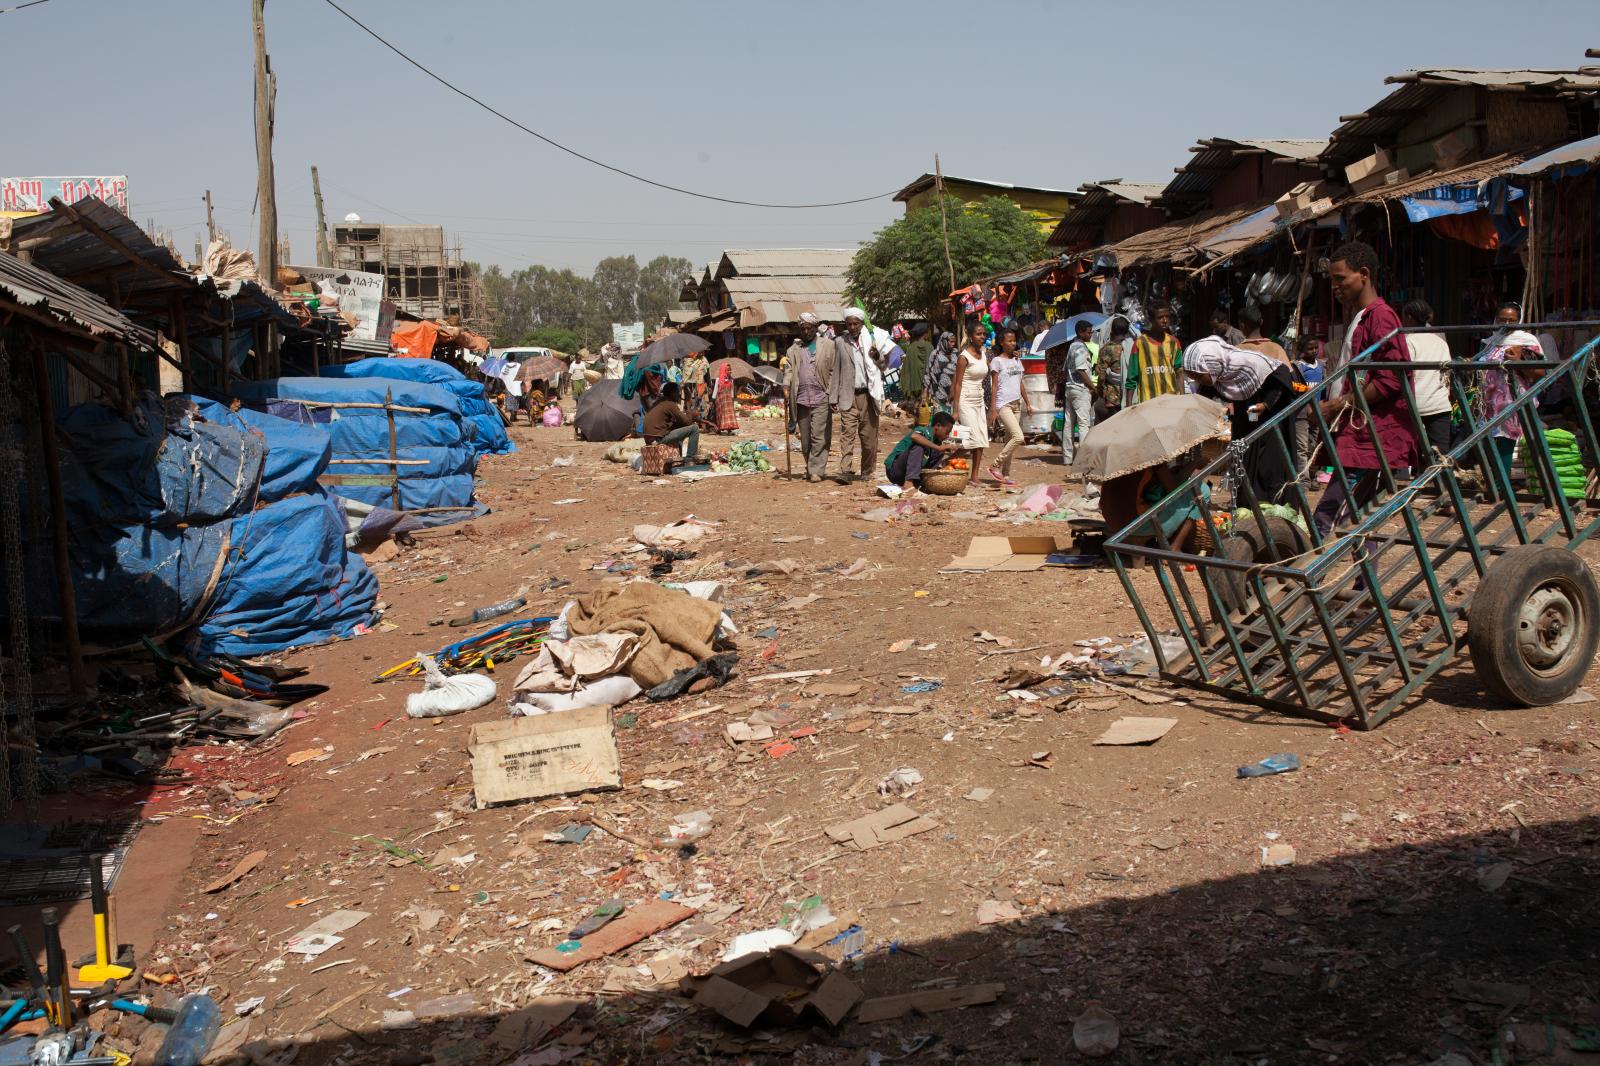 Visuals of the Bahir Dar open air market.